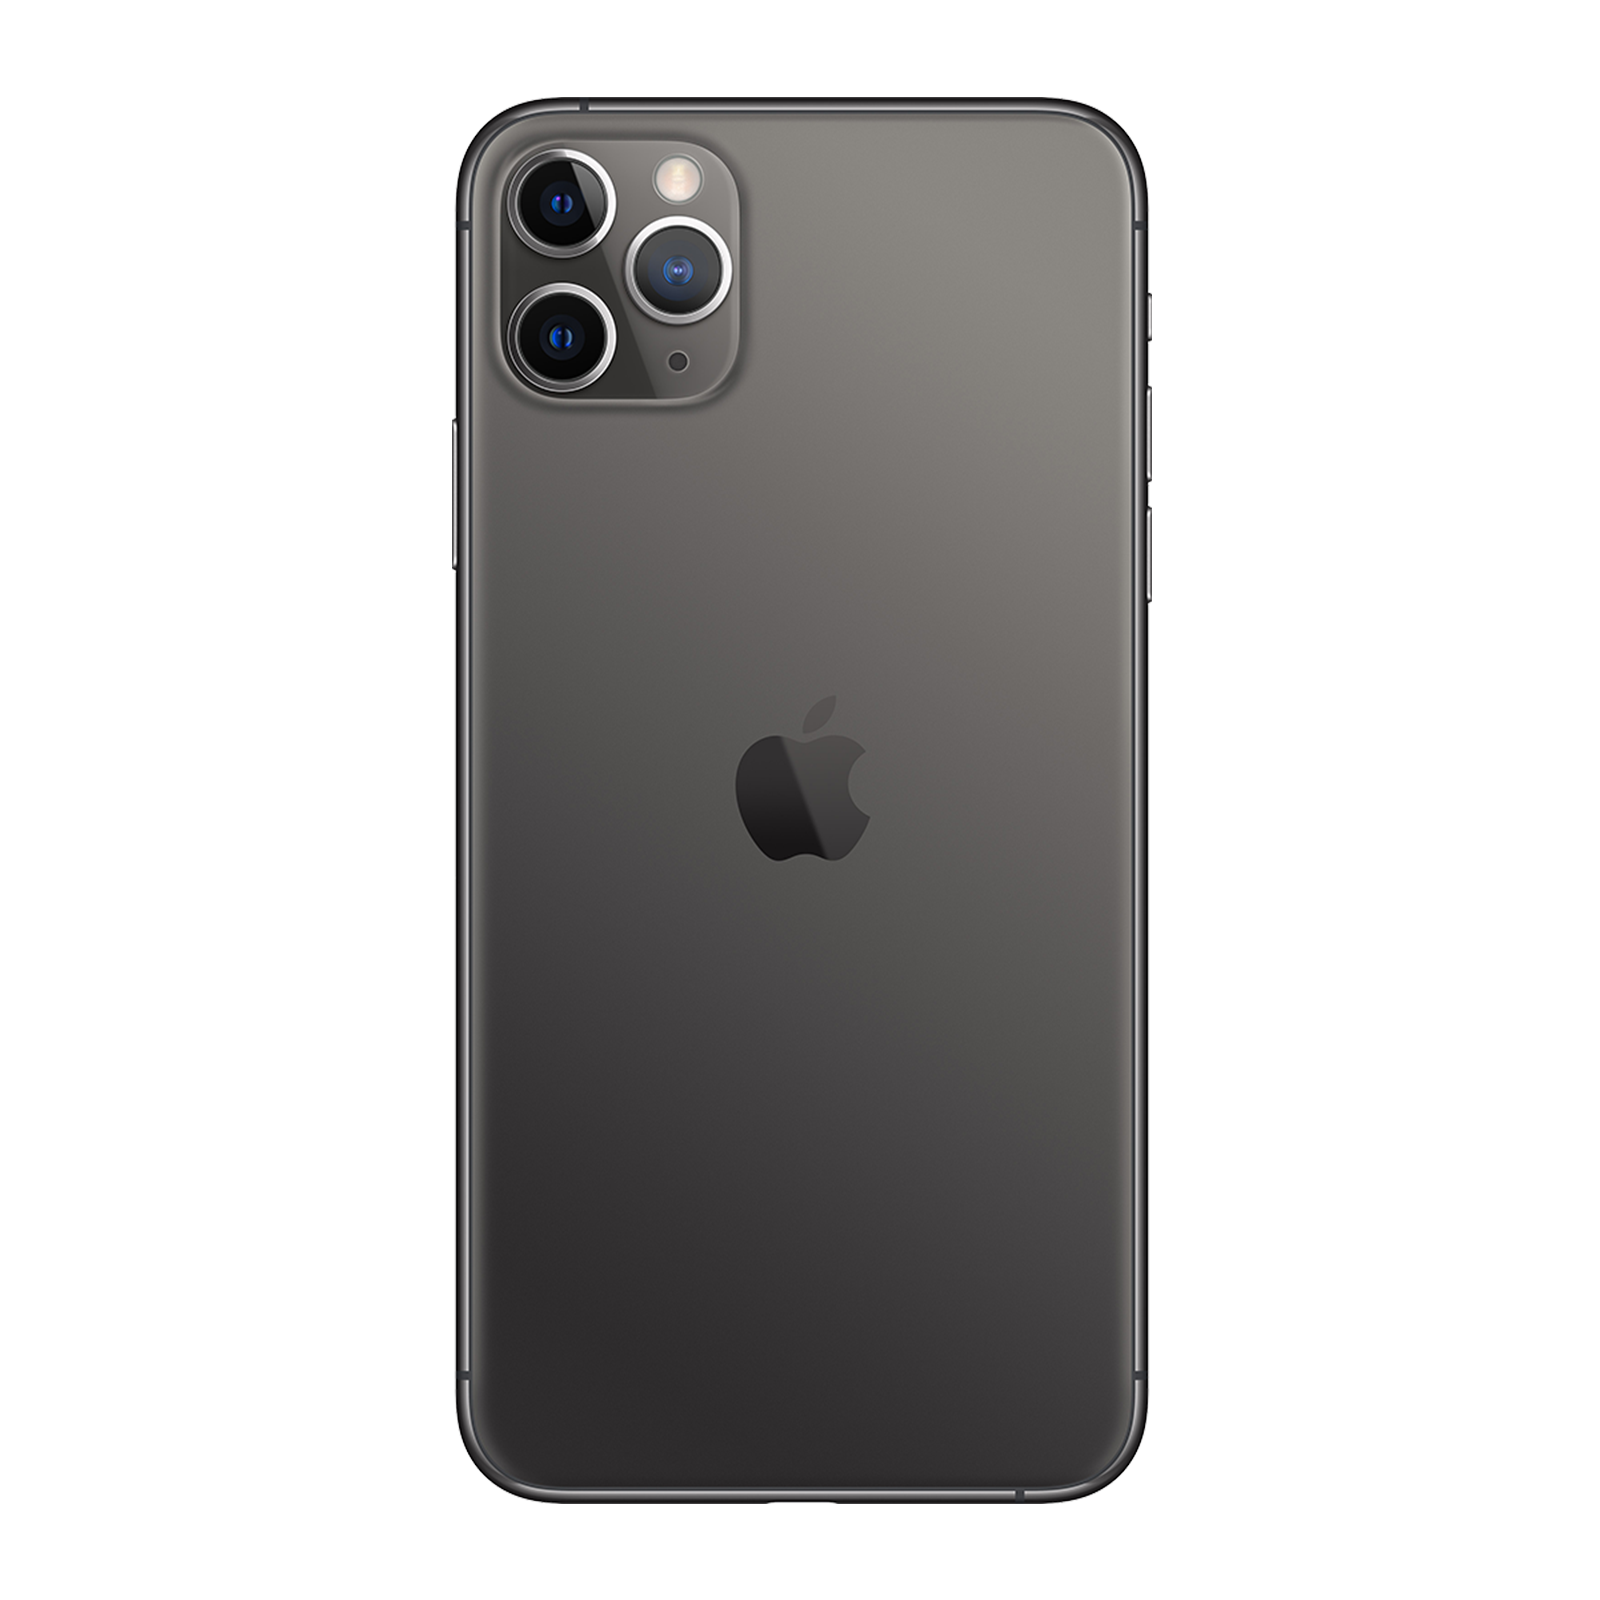 Apple iPhone 11 Pro Max 64GB Space Grey Very Good - Verizon